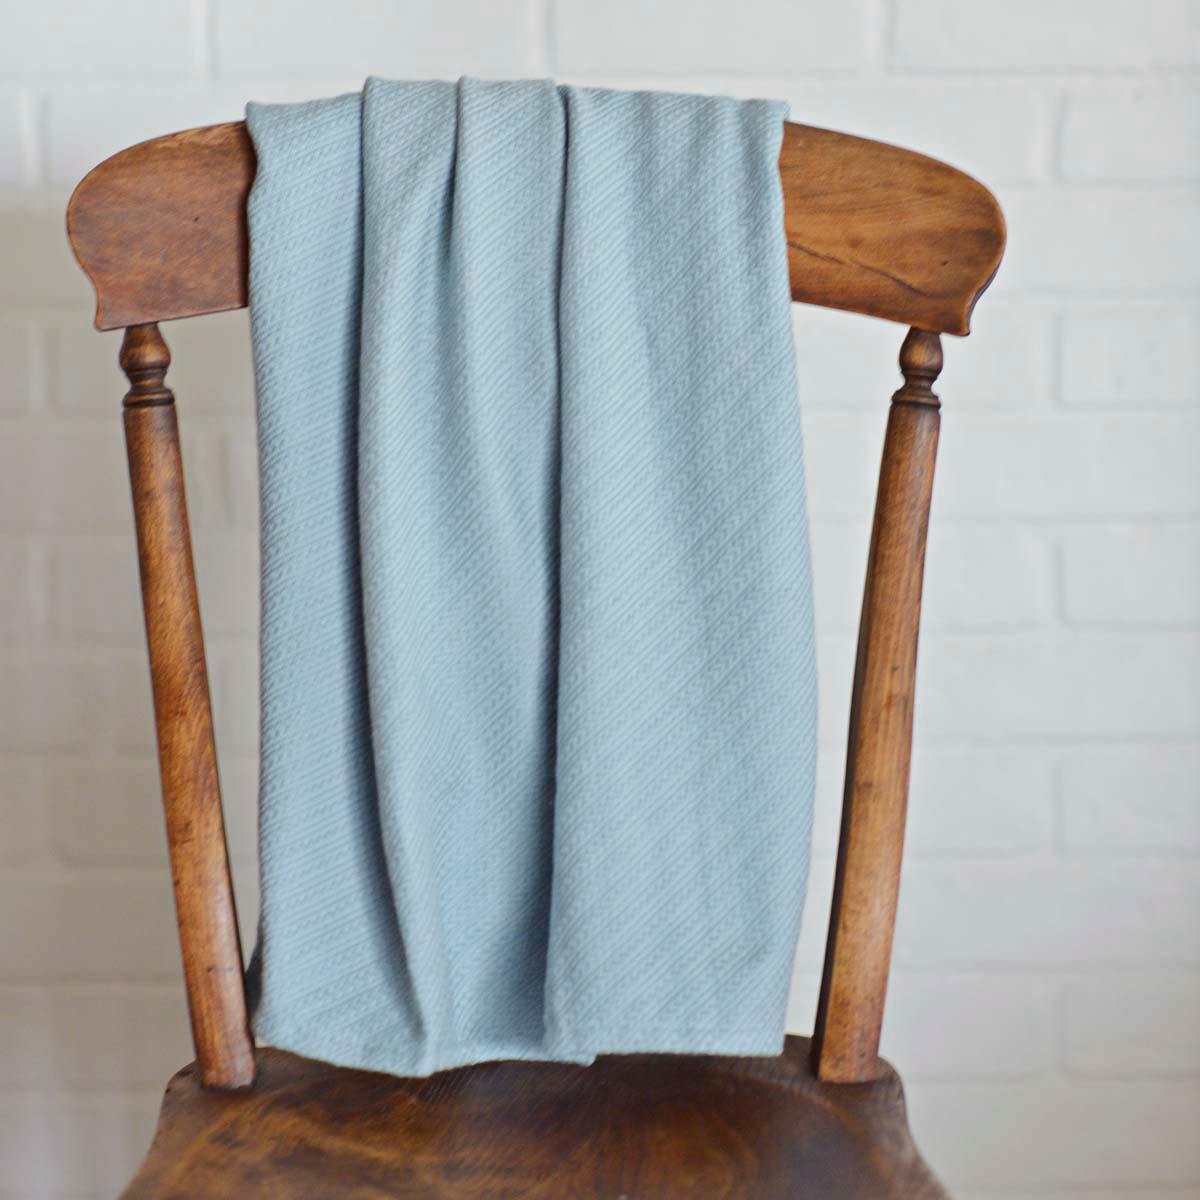 Medium Blue Baby Blanket 48x36 VHC Brands - The Fox Decor